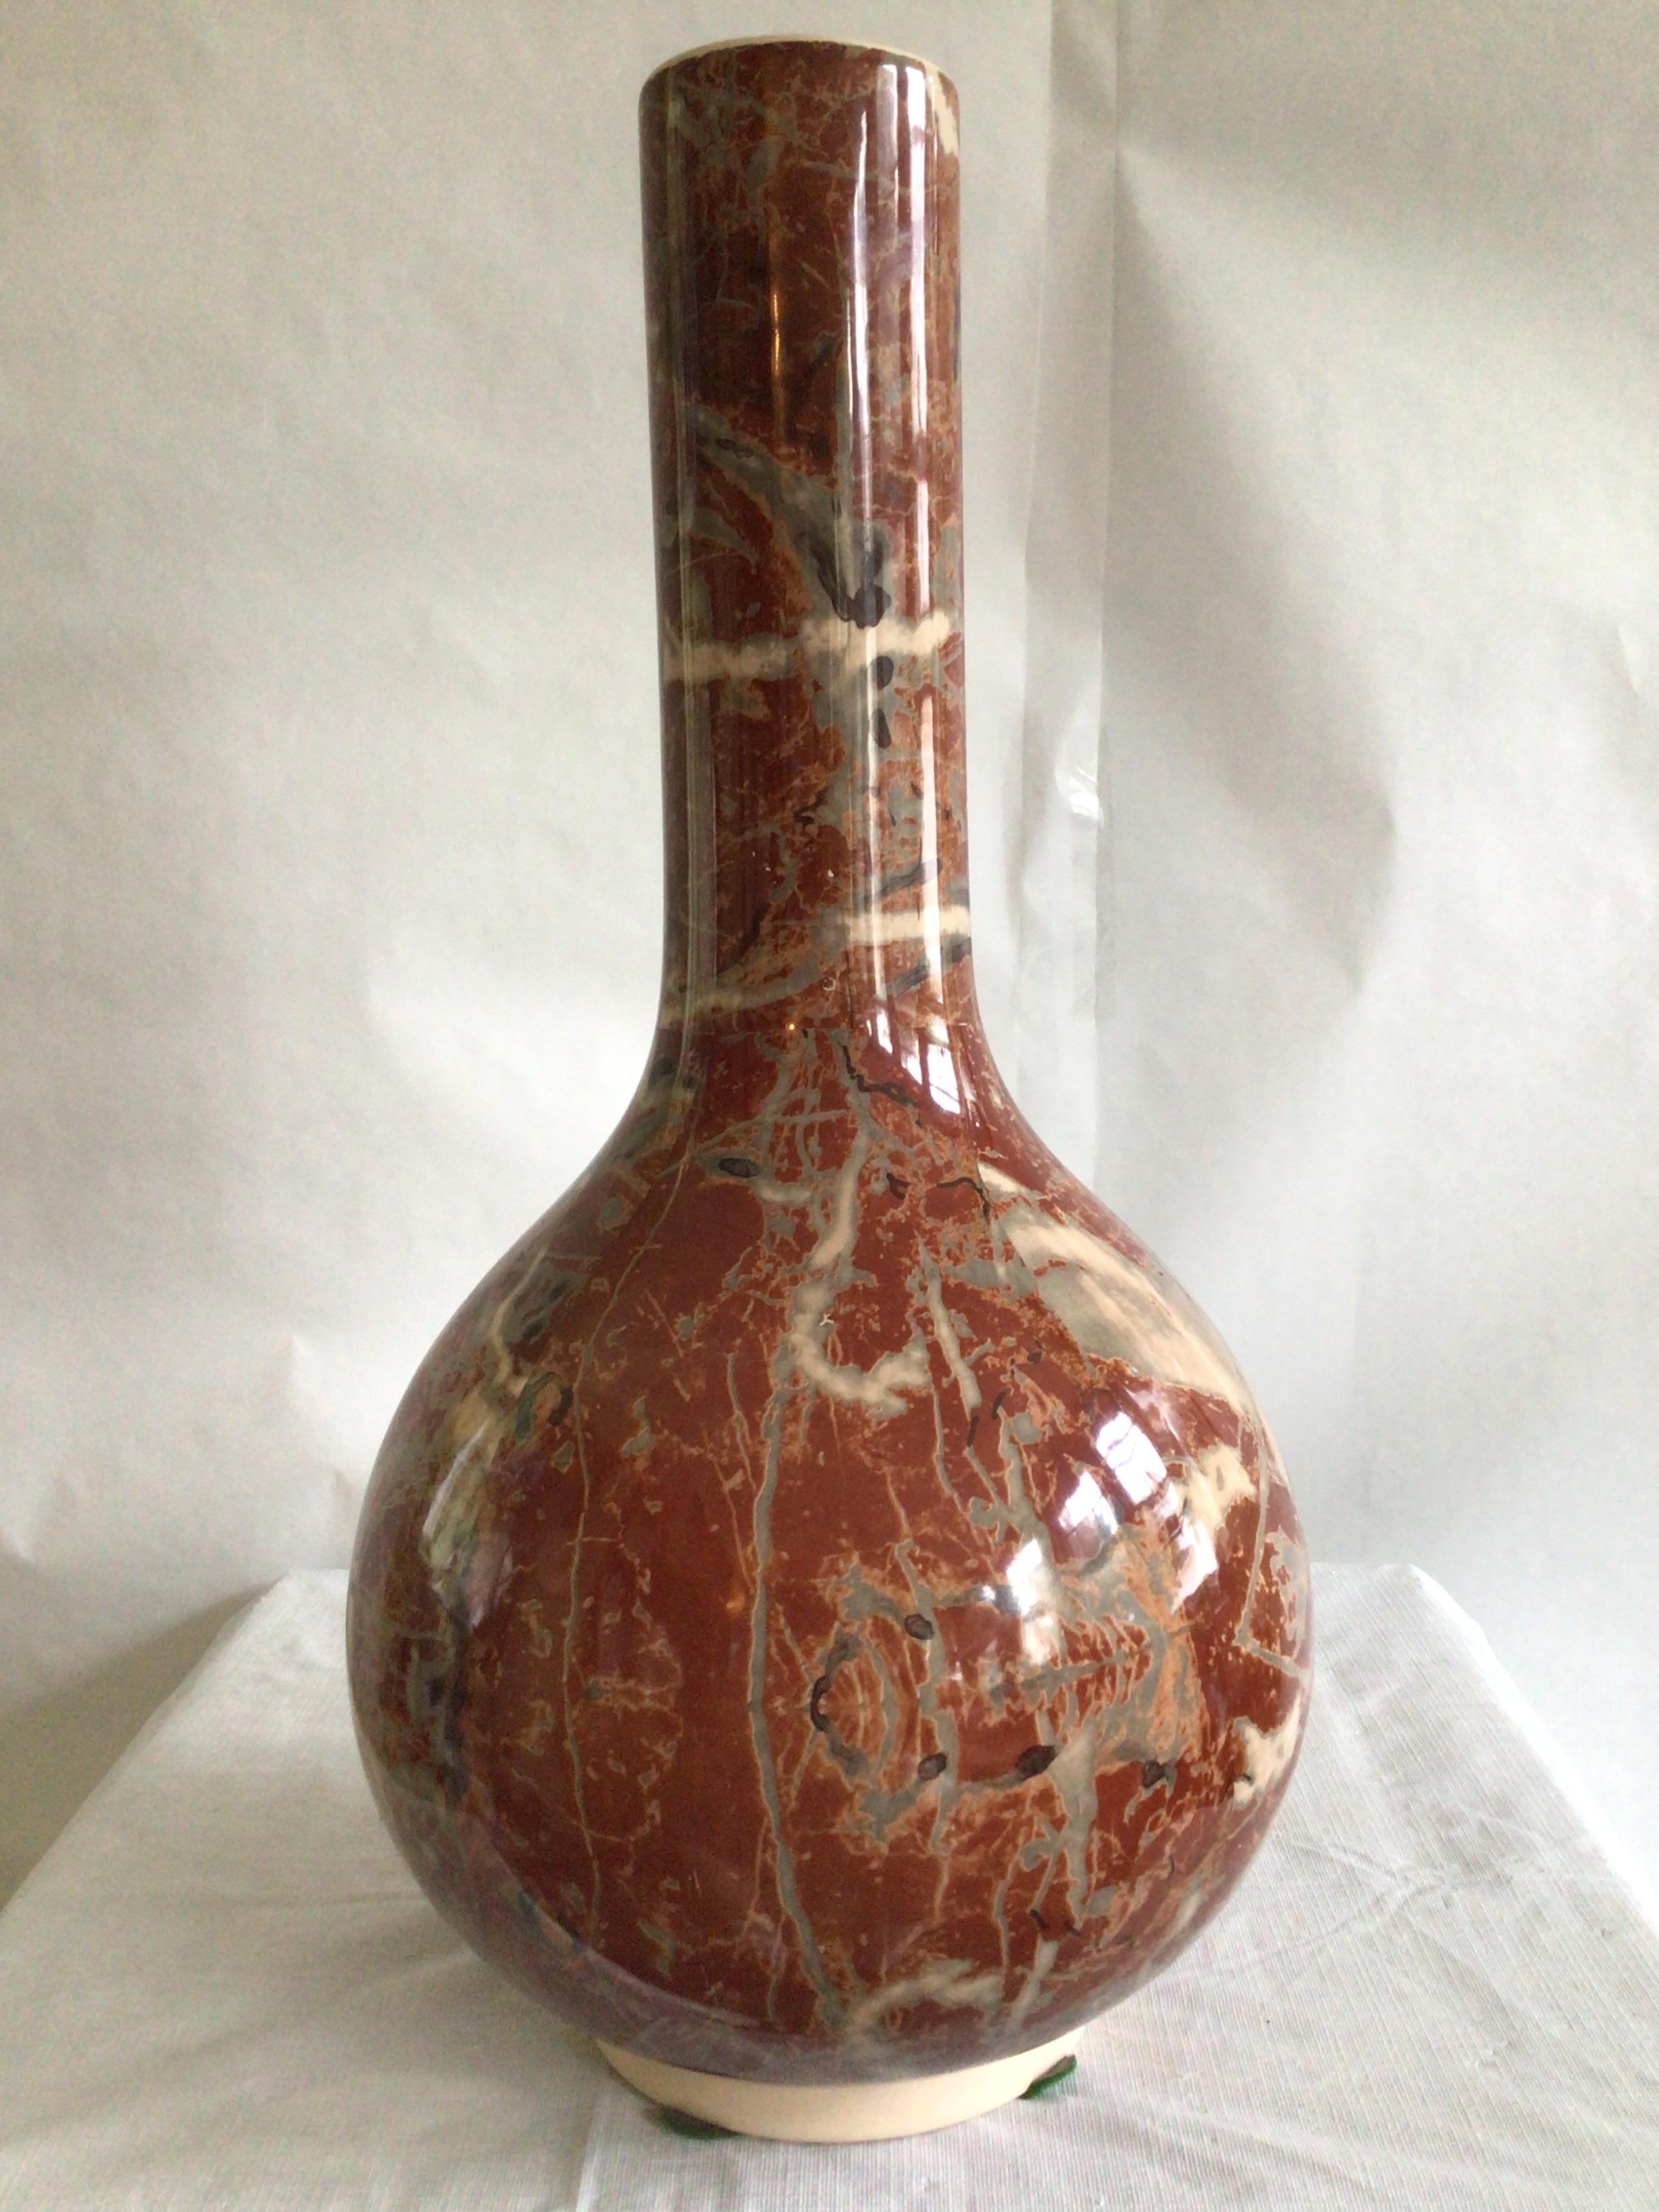 1960s Italian Glazed Ceramic Marbleized Vase 
Signed: BELLINI - ITALY
Rust reds, cream, and grey make up this beautiful faux marbled vase